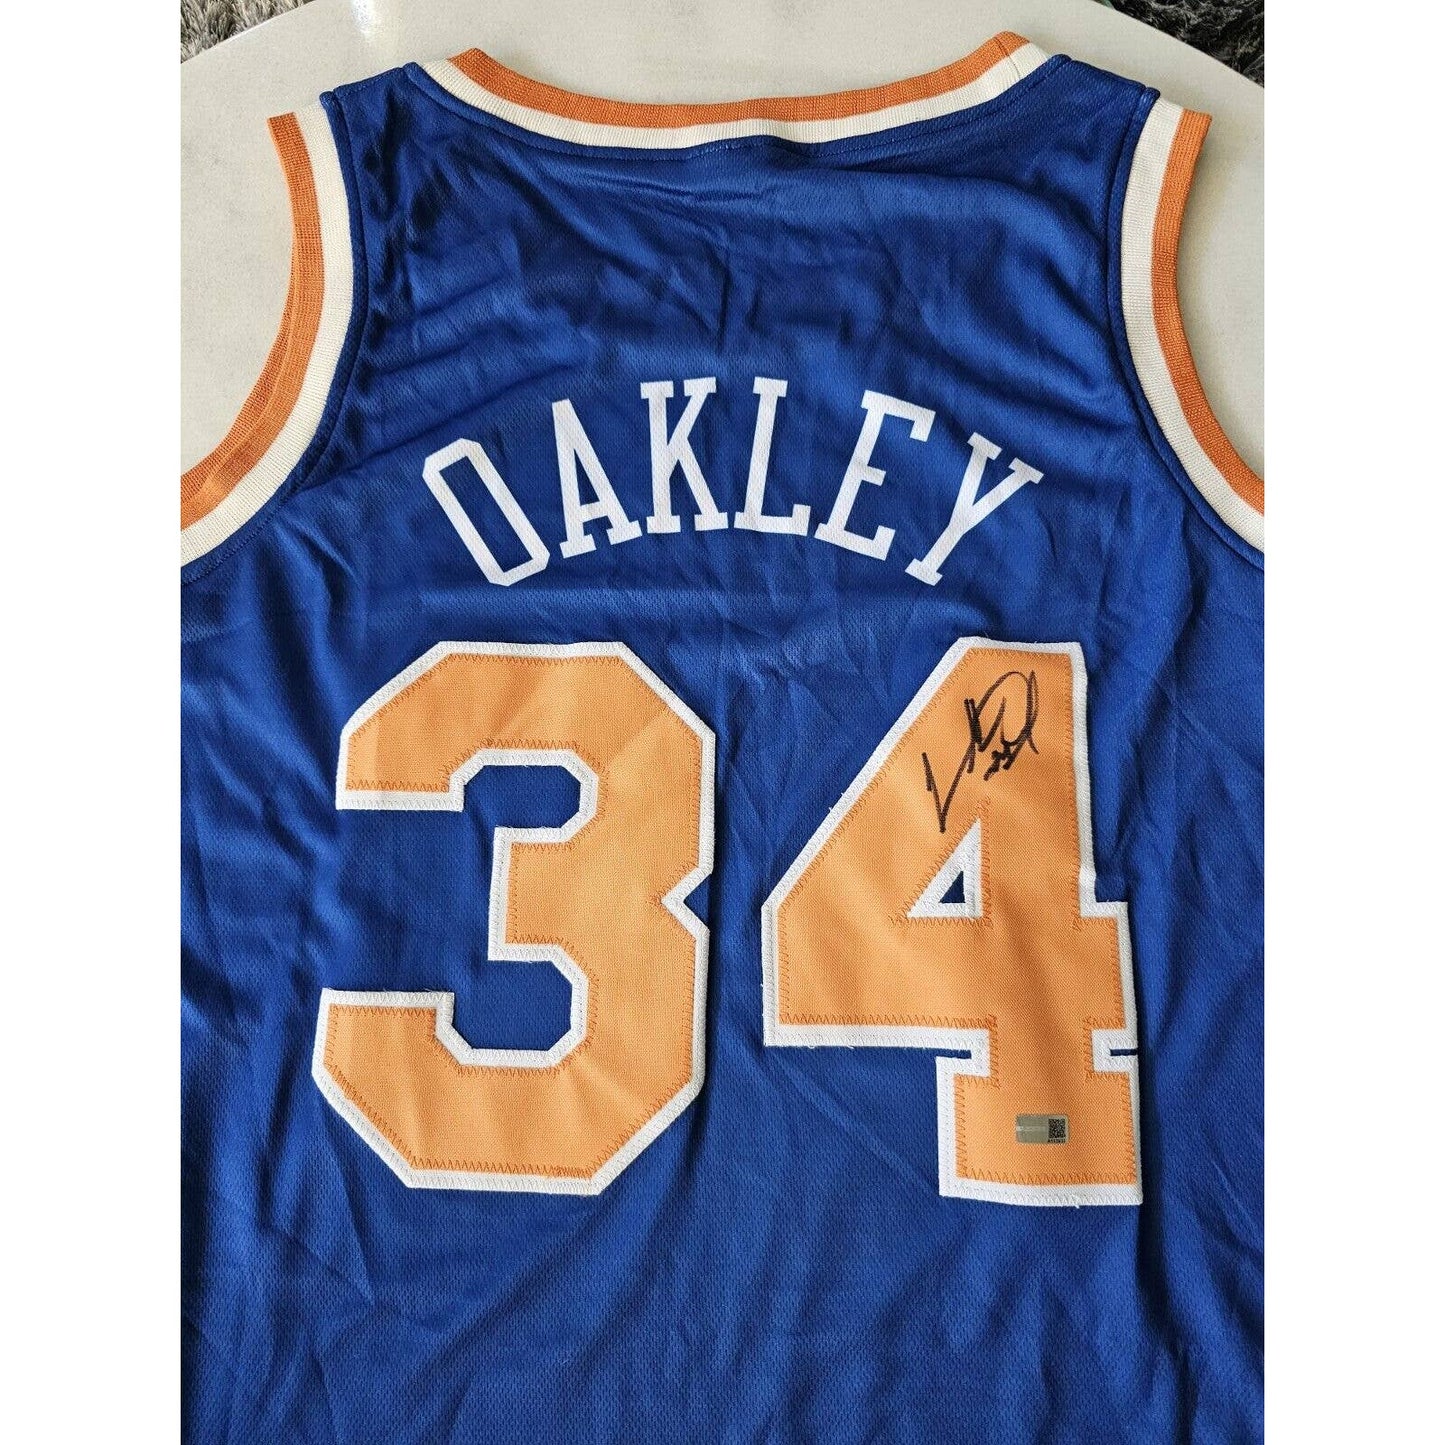 Charles Oakley Autographed/Signed Jersey New York Knicks Legend